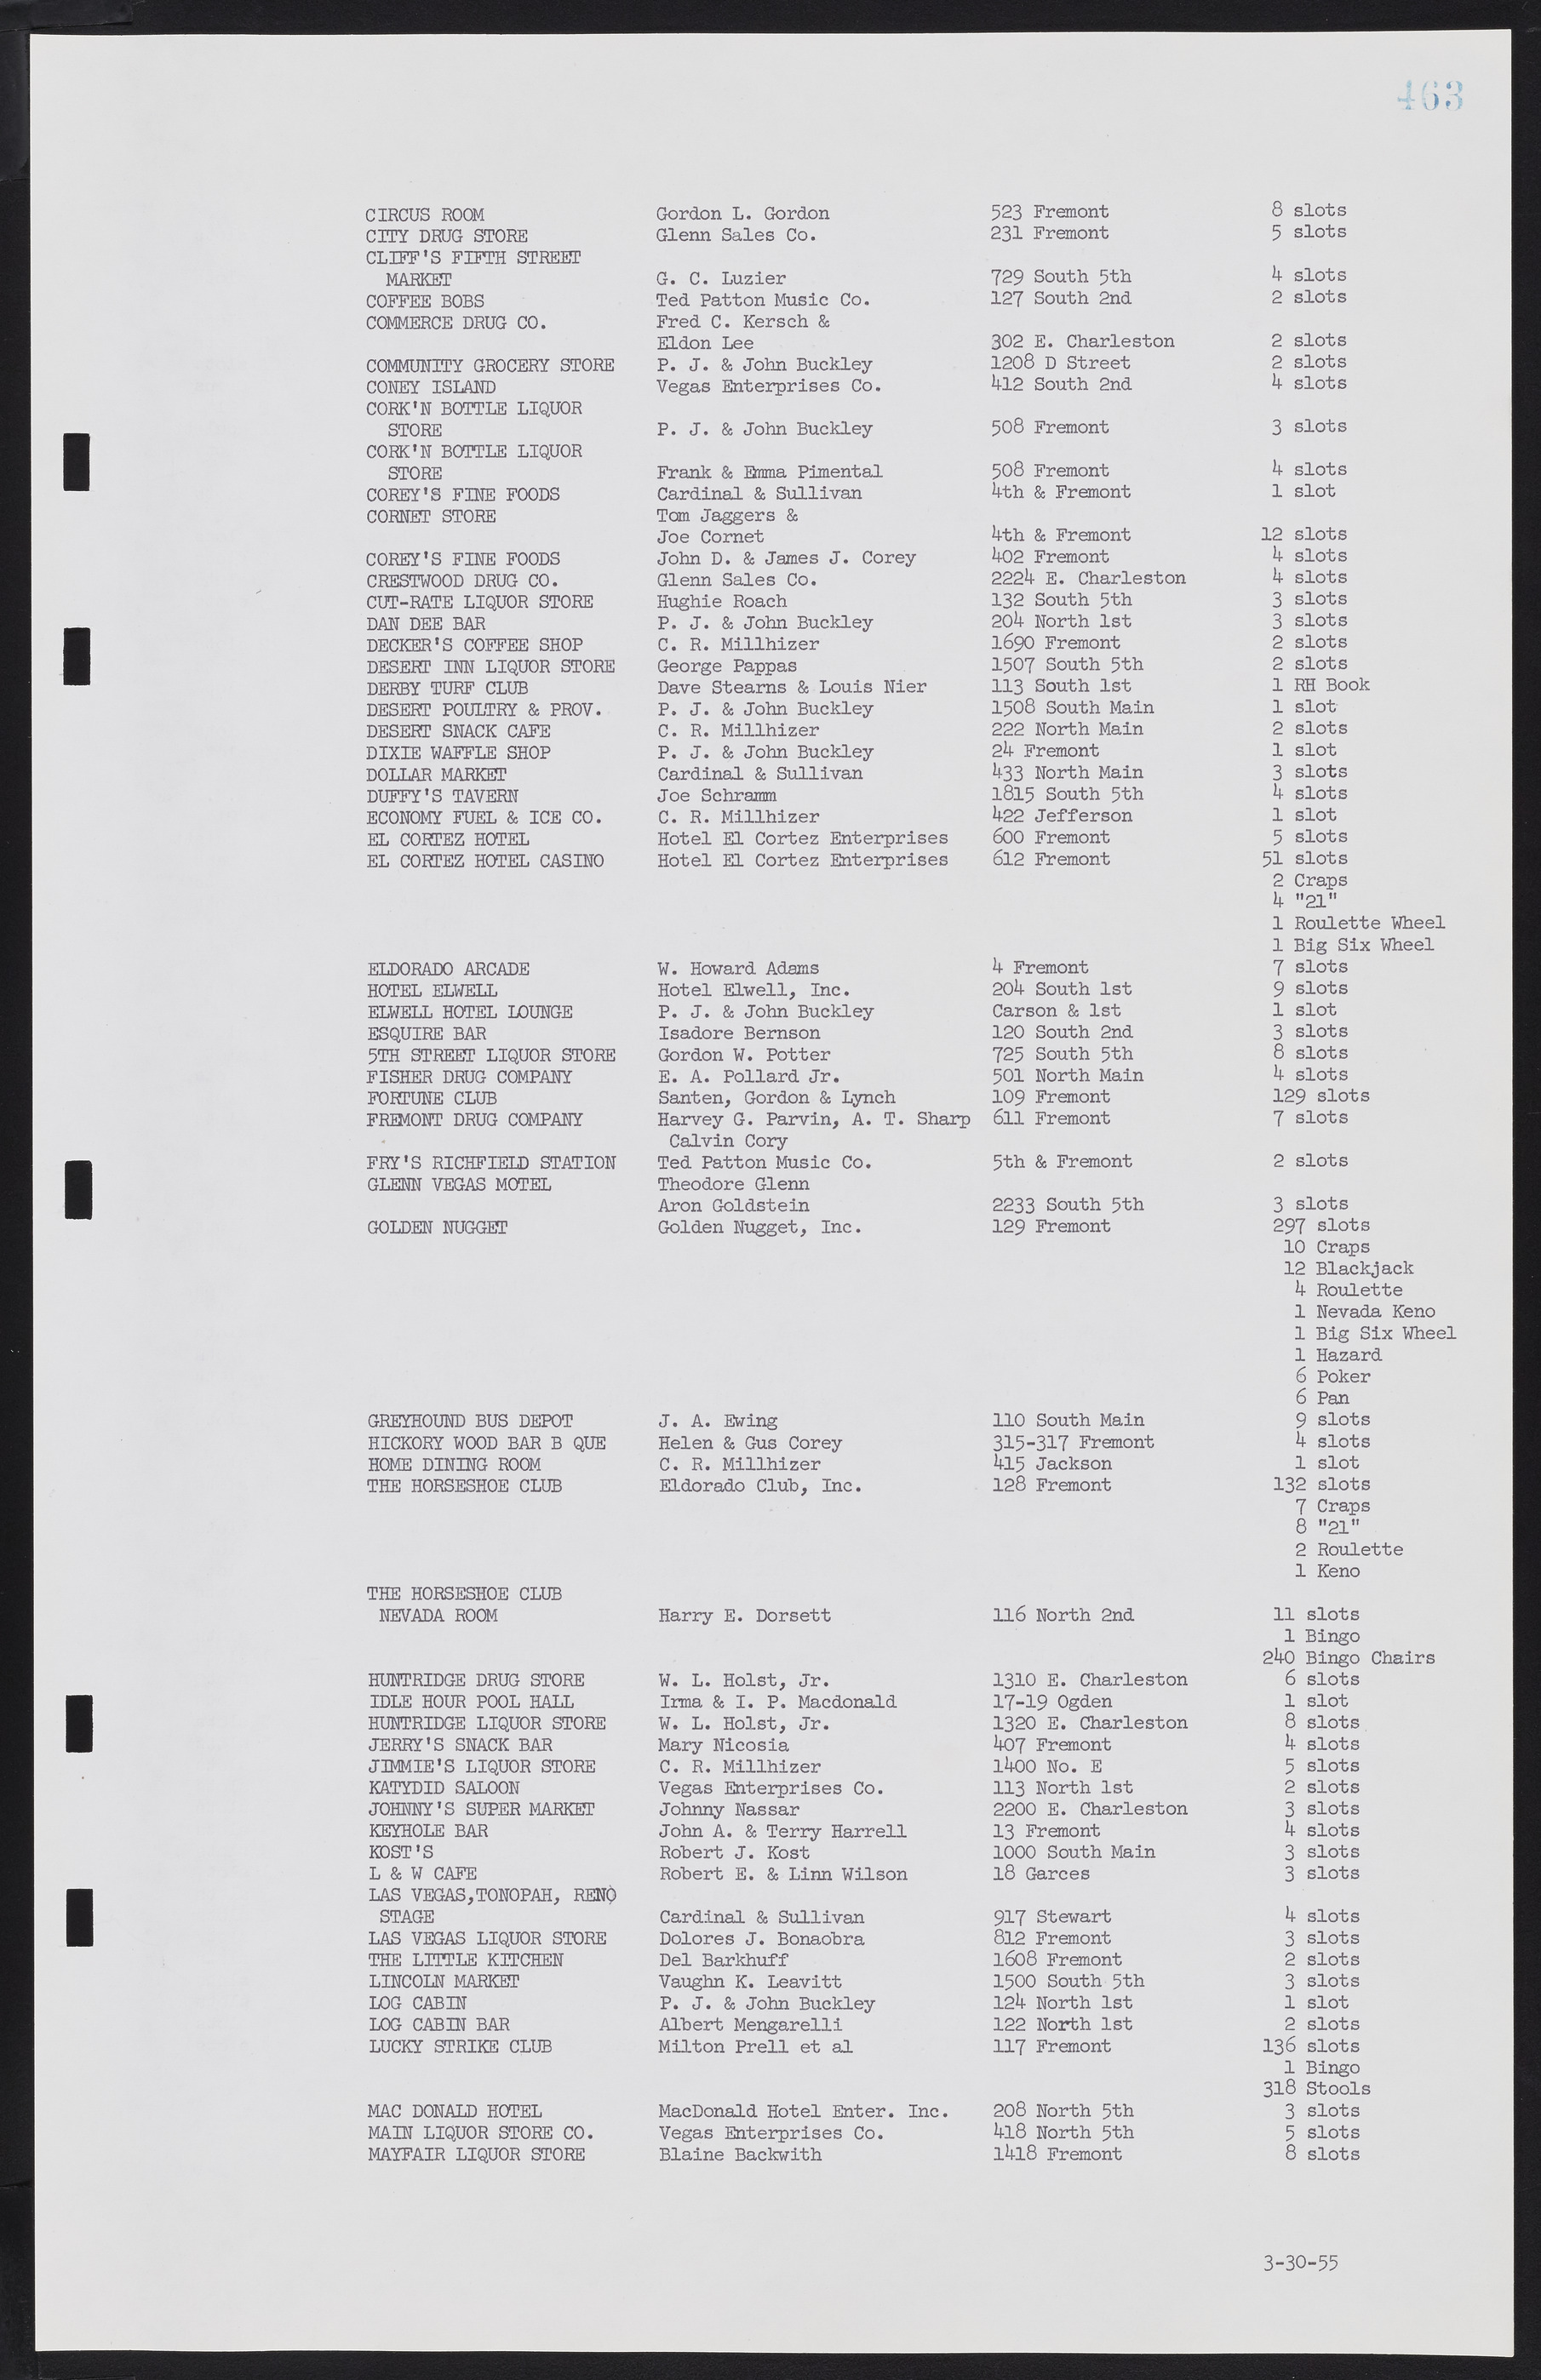 Las Vegas City Commission Minutes, February 17, 1954 to September 21, 1955, lvc000009-469